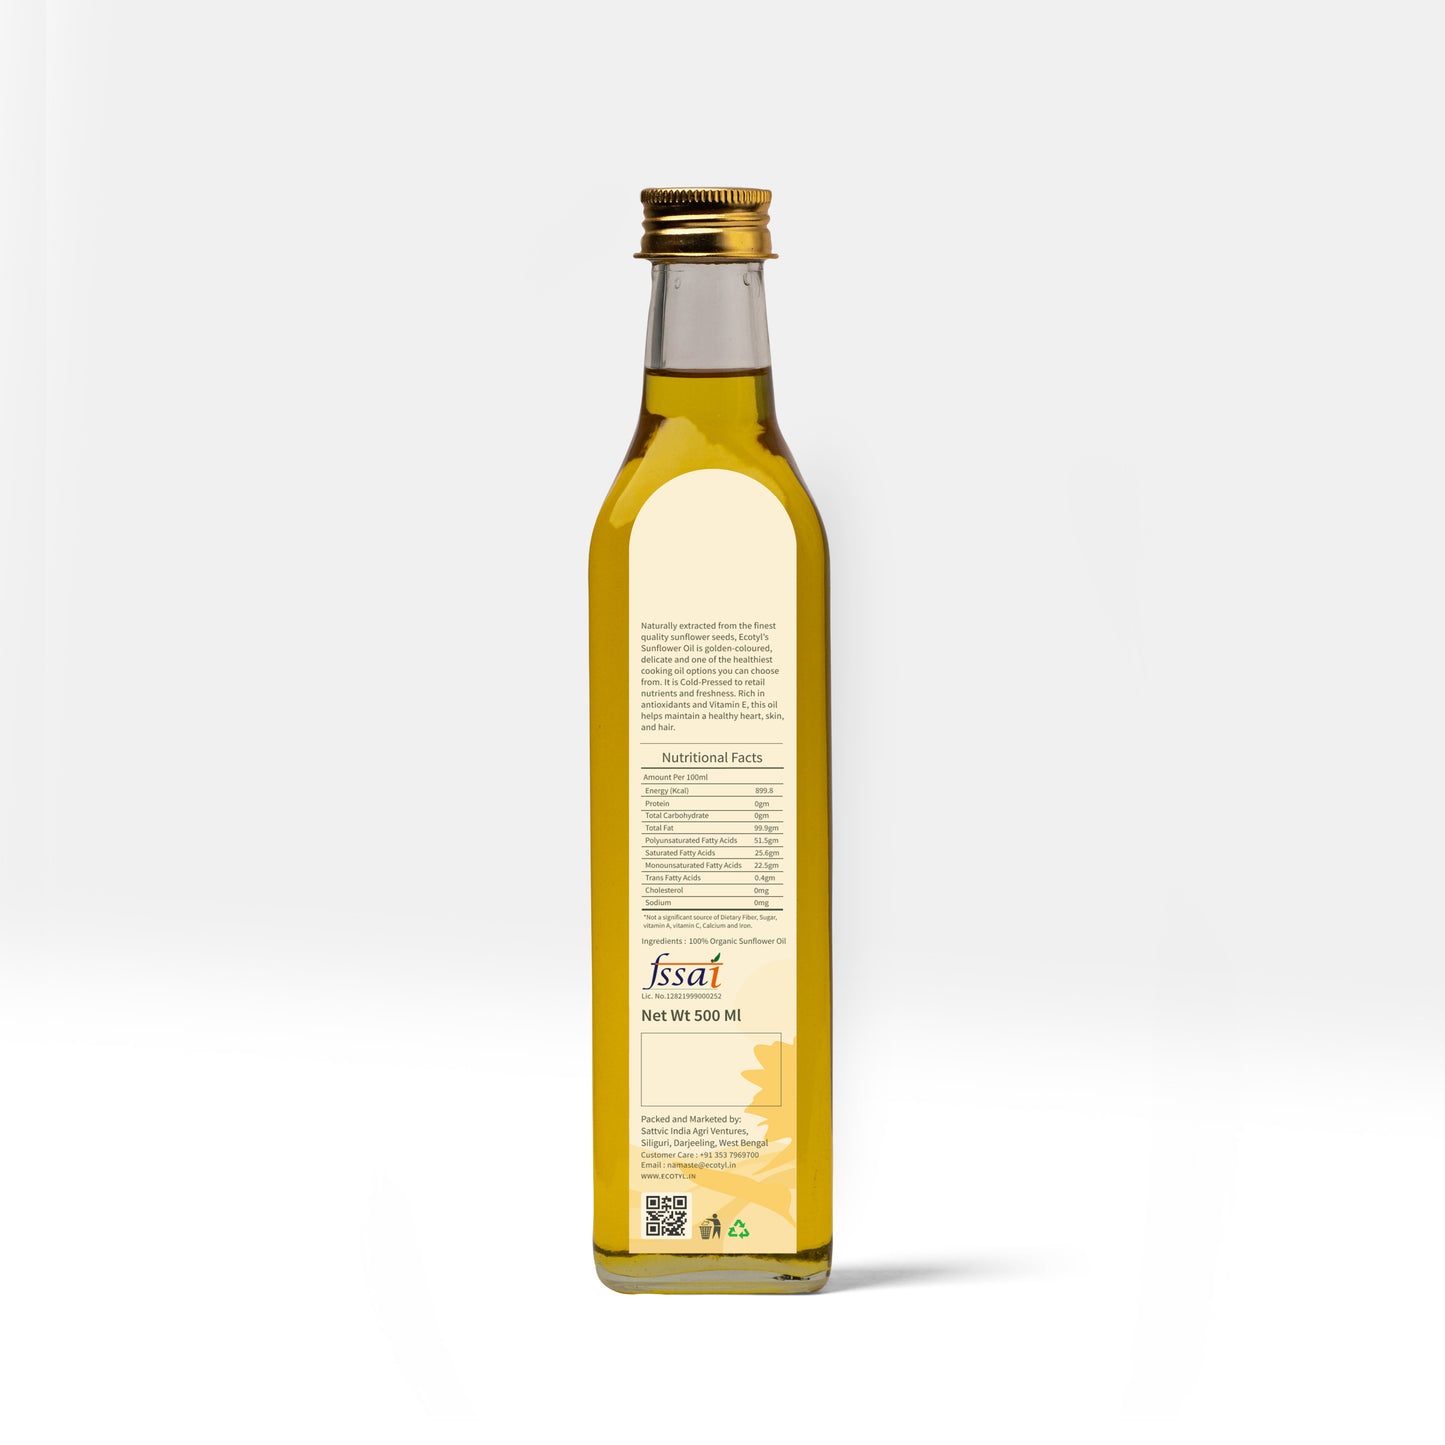 
                  
                    Ecotyl Organic Cold-Pressed Sunflower Oil (500ml)
                  
                